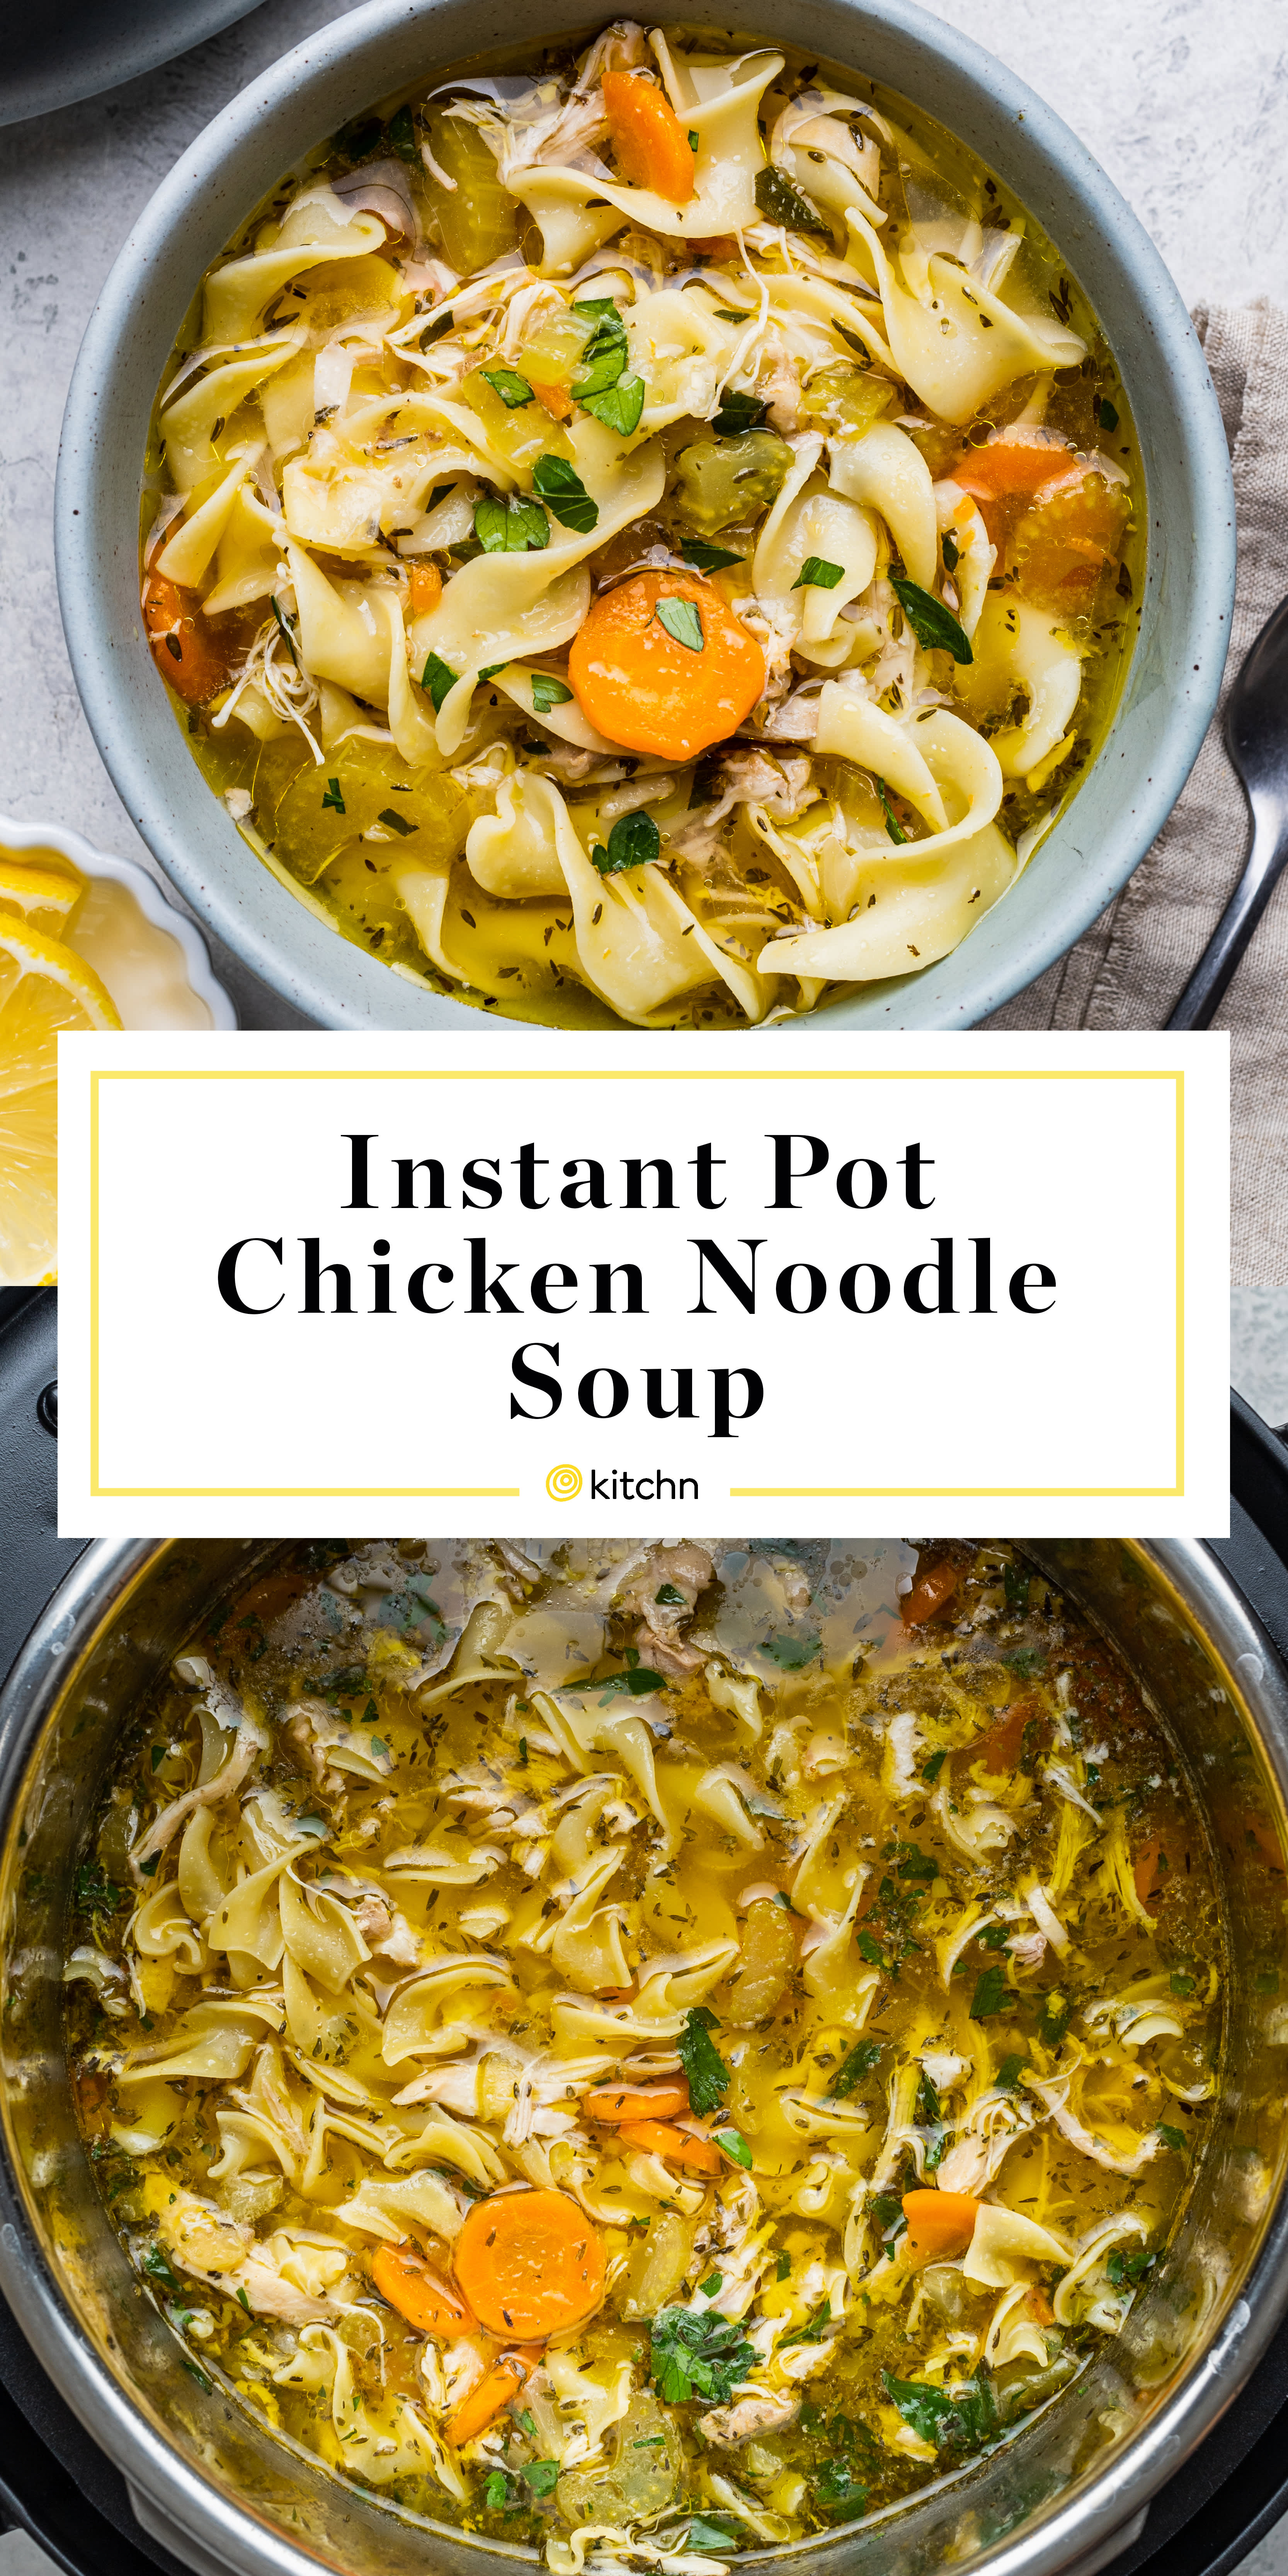 https://cdn.apartmenttherapy.info/image/upload/v1576702794/k/Photo/Recipes/2019-12-instant-pot-chicken-noodle-soup/instantpotchickennoodlesoup.jpg